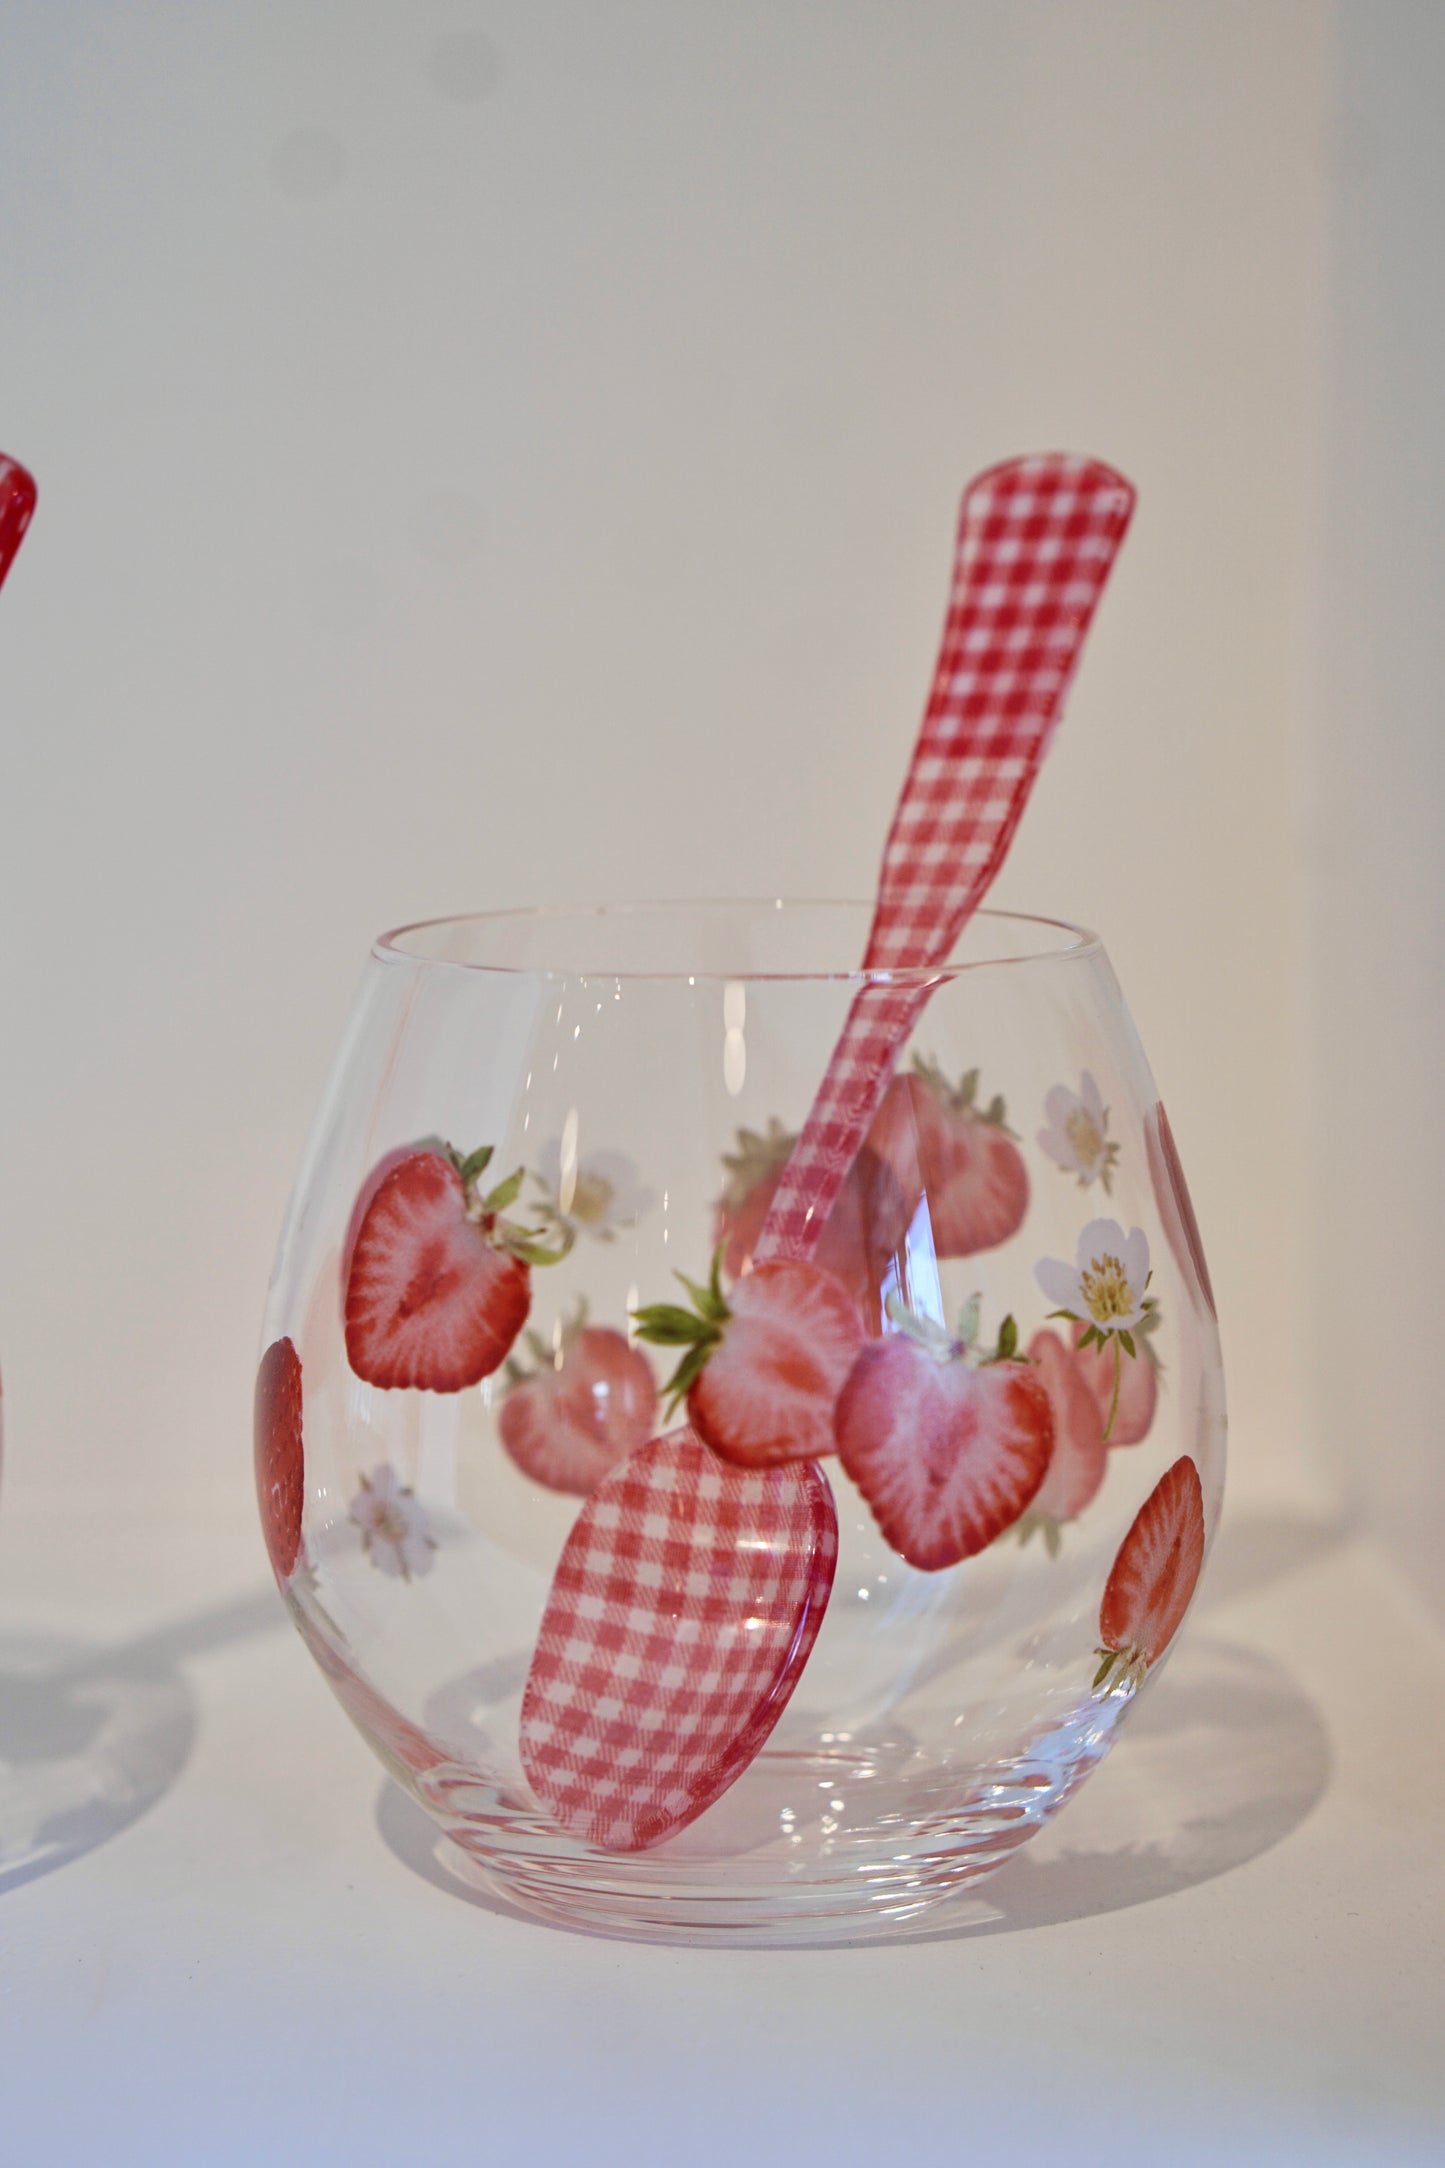 Fruit Glass Tumbler Gift Set